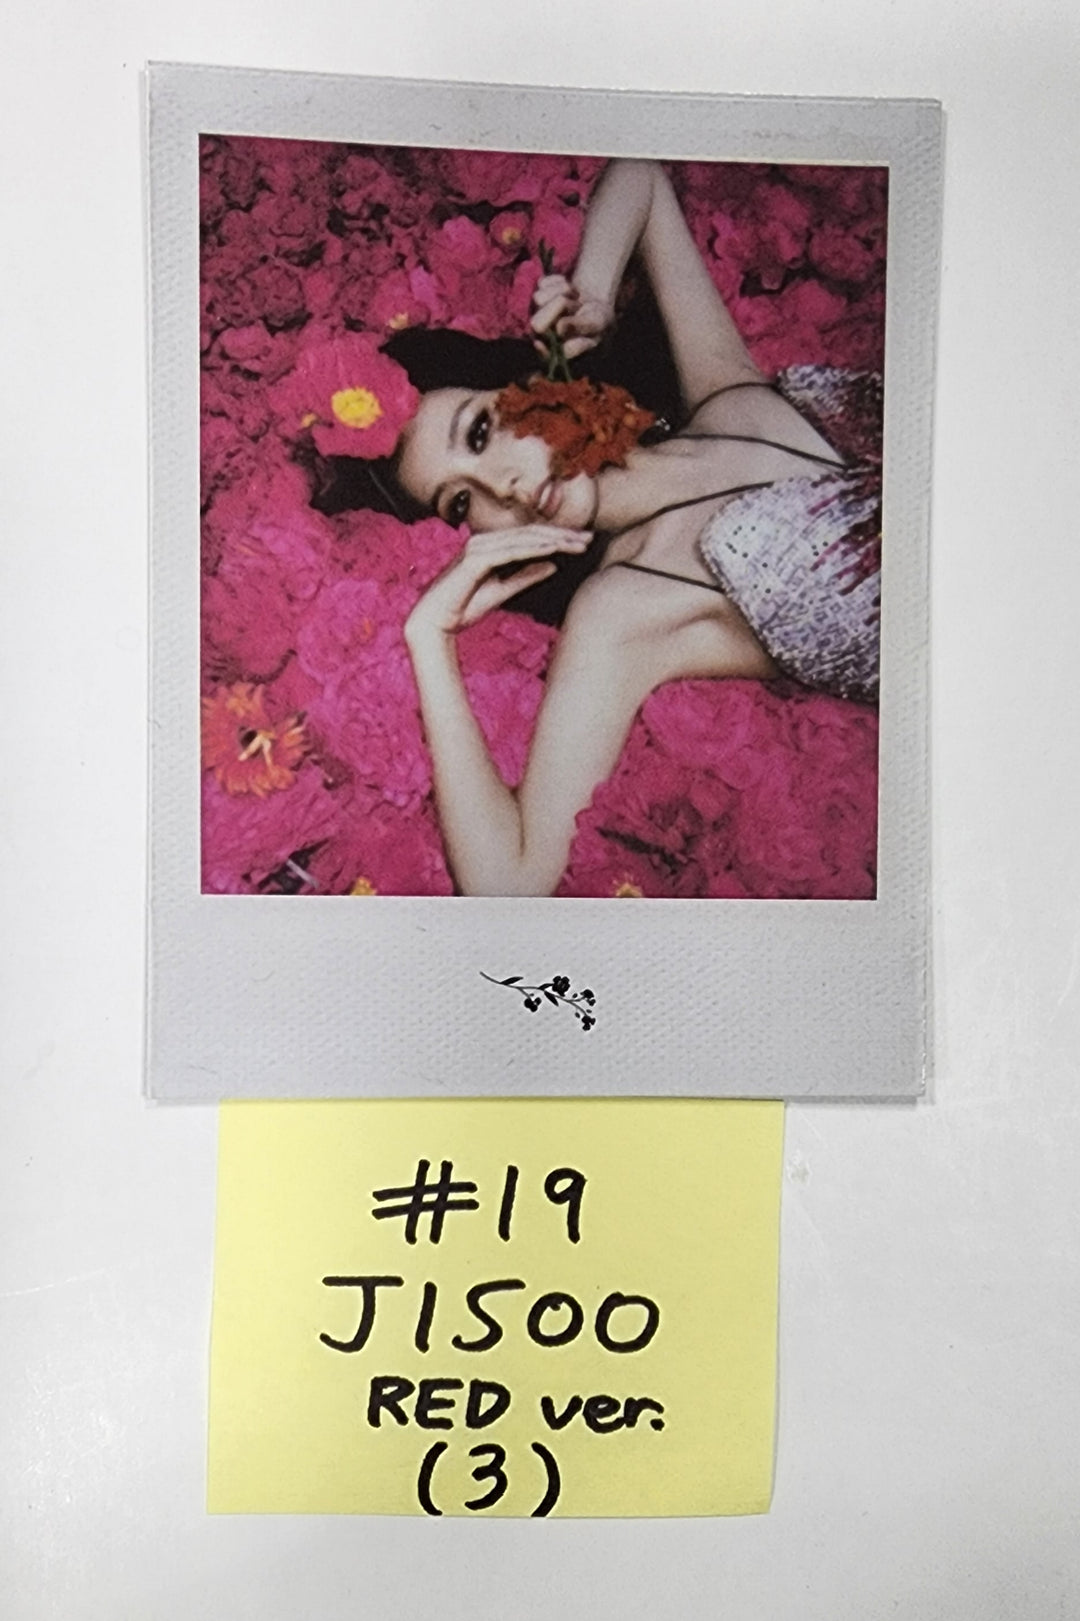 JISOO (Of Black Pink) "ME" 1st Single Album - Official Photocard, Polaroid